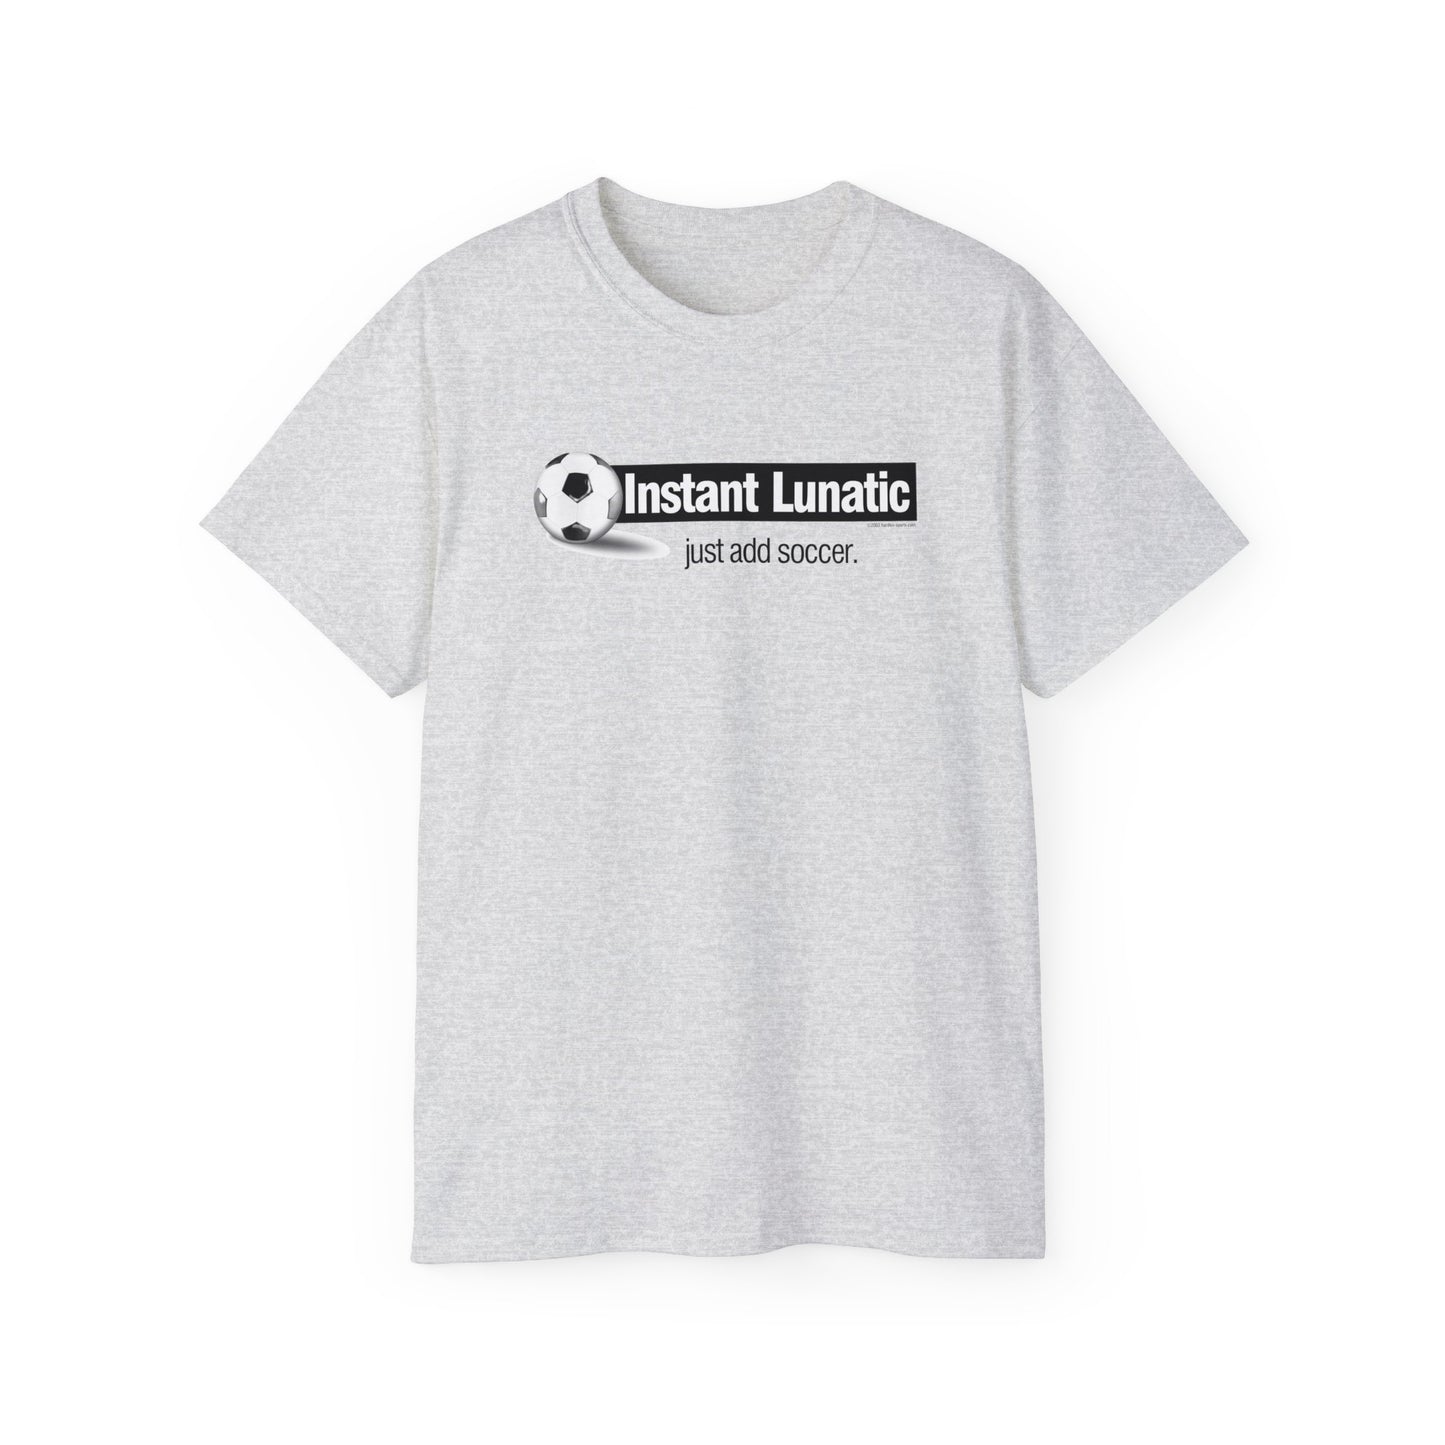 Instant Lunatic, Just Add soccer, Soccer t-shirt, Soccer Crazy Fan, Soccer Extreme Player, Football, Futsal t-shirt, Soccer Gift, Soccer Tee